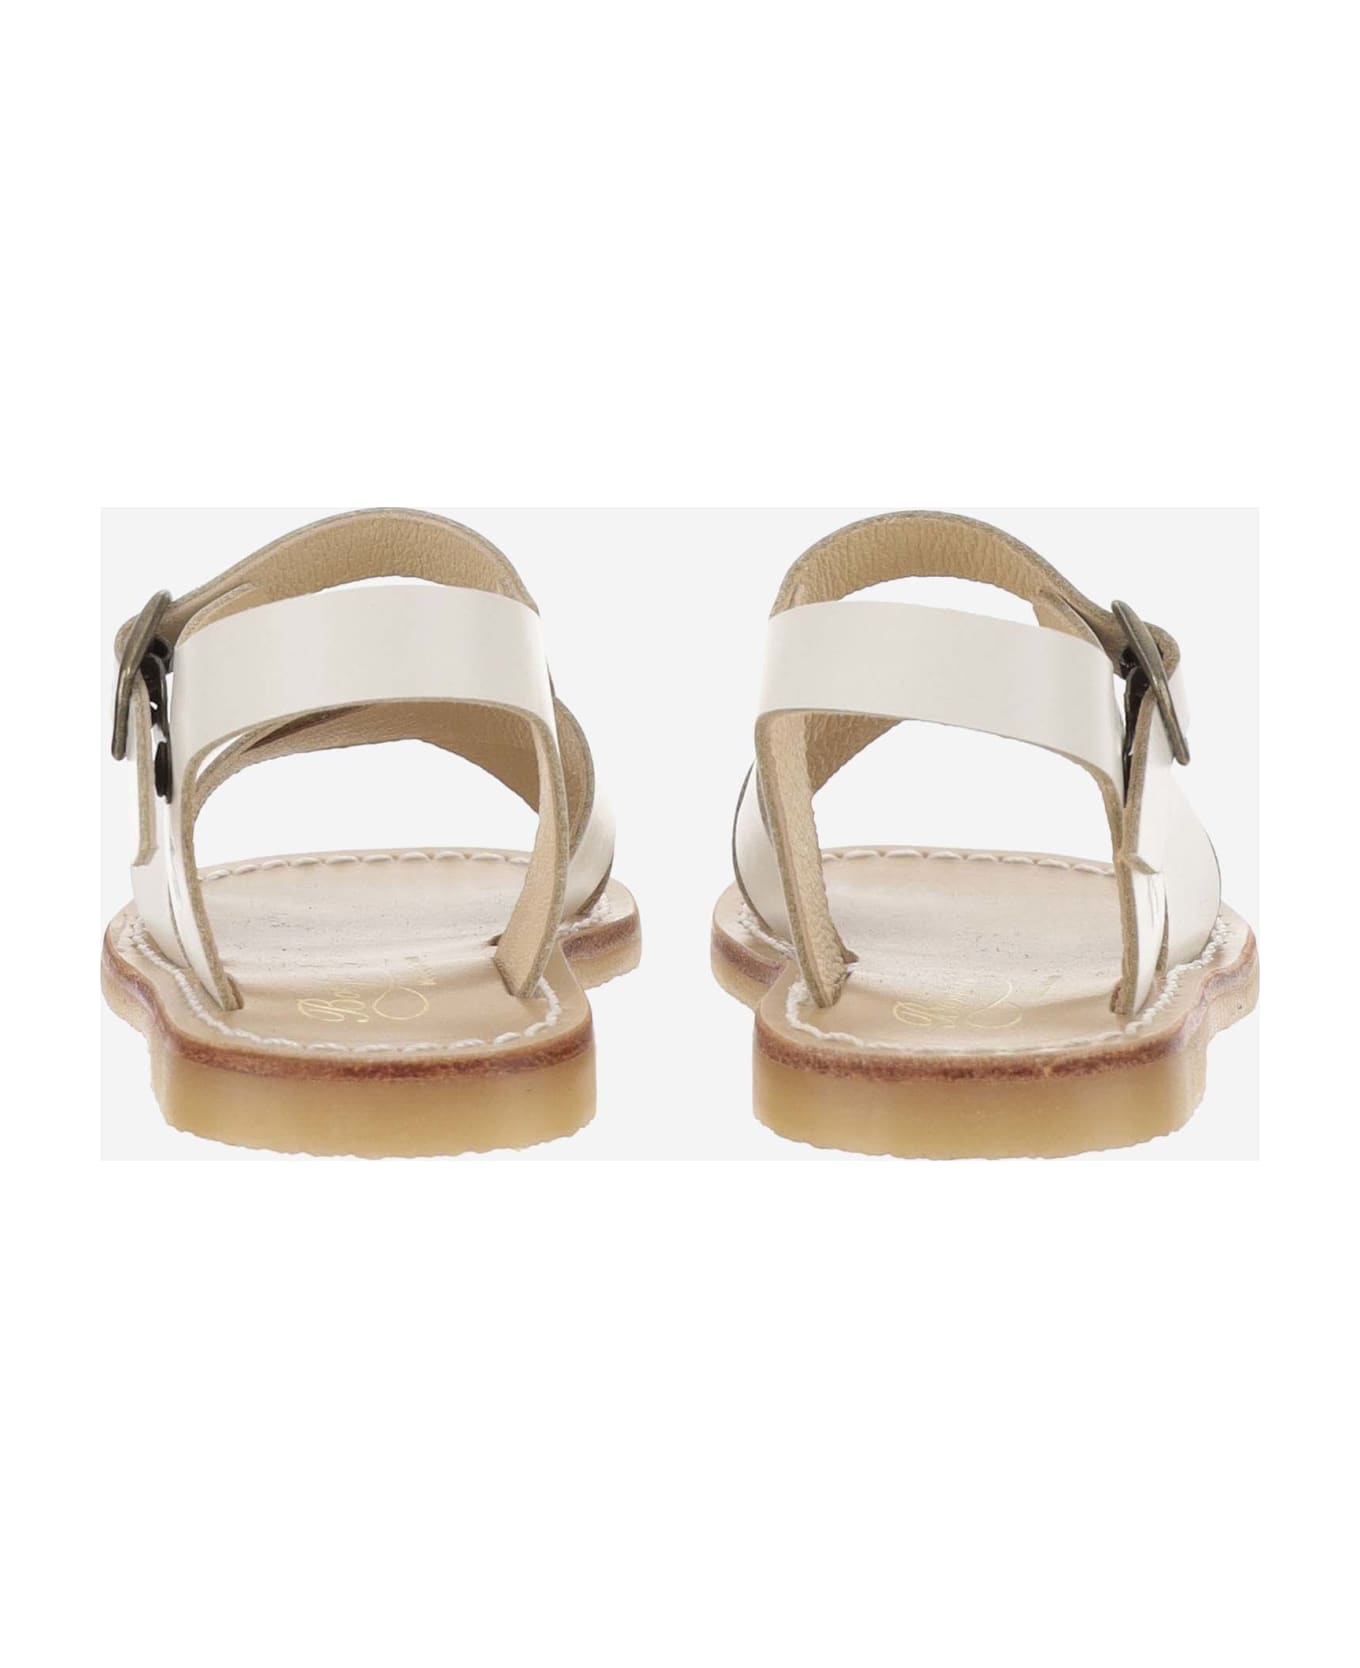 Bonpoint Leather Sandals - White